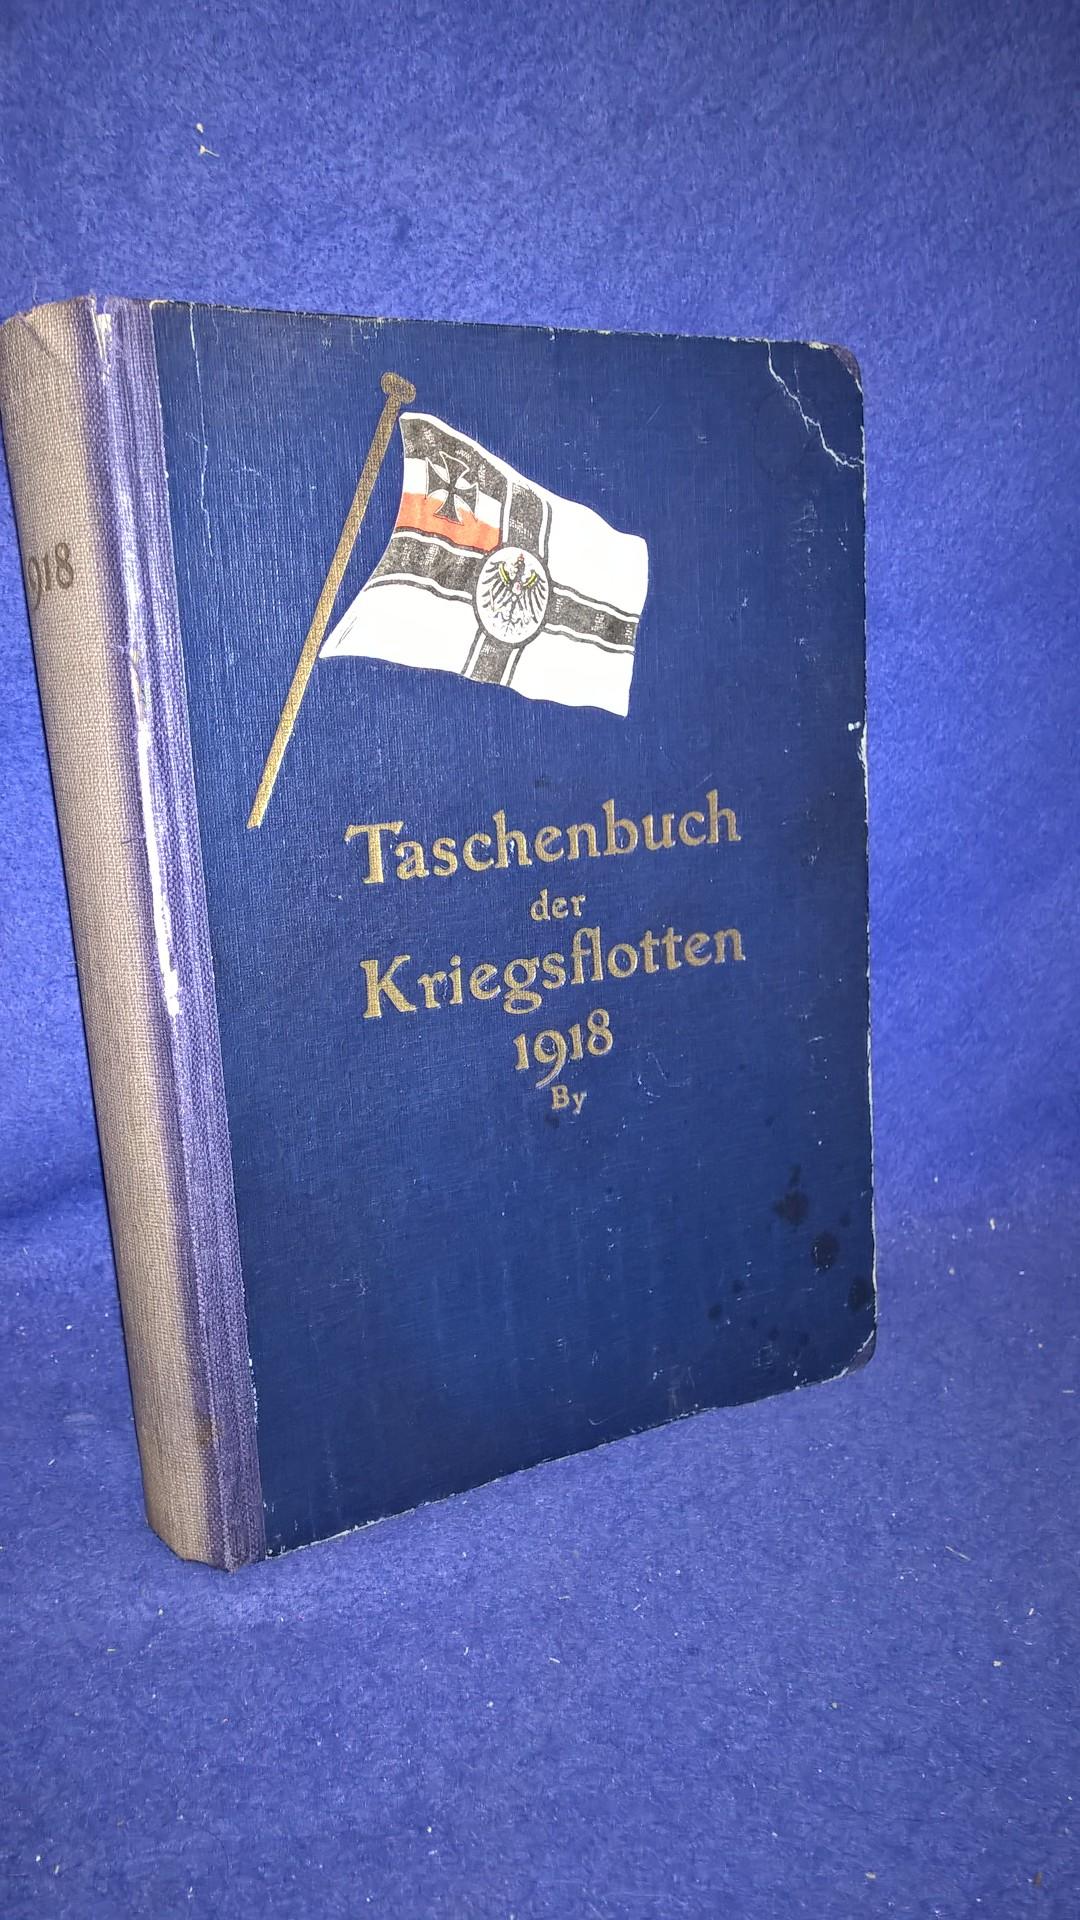 Taschenbuch der Kriegsflotten XIX. Jahrgang 1918. Reprint-Ausgabe!